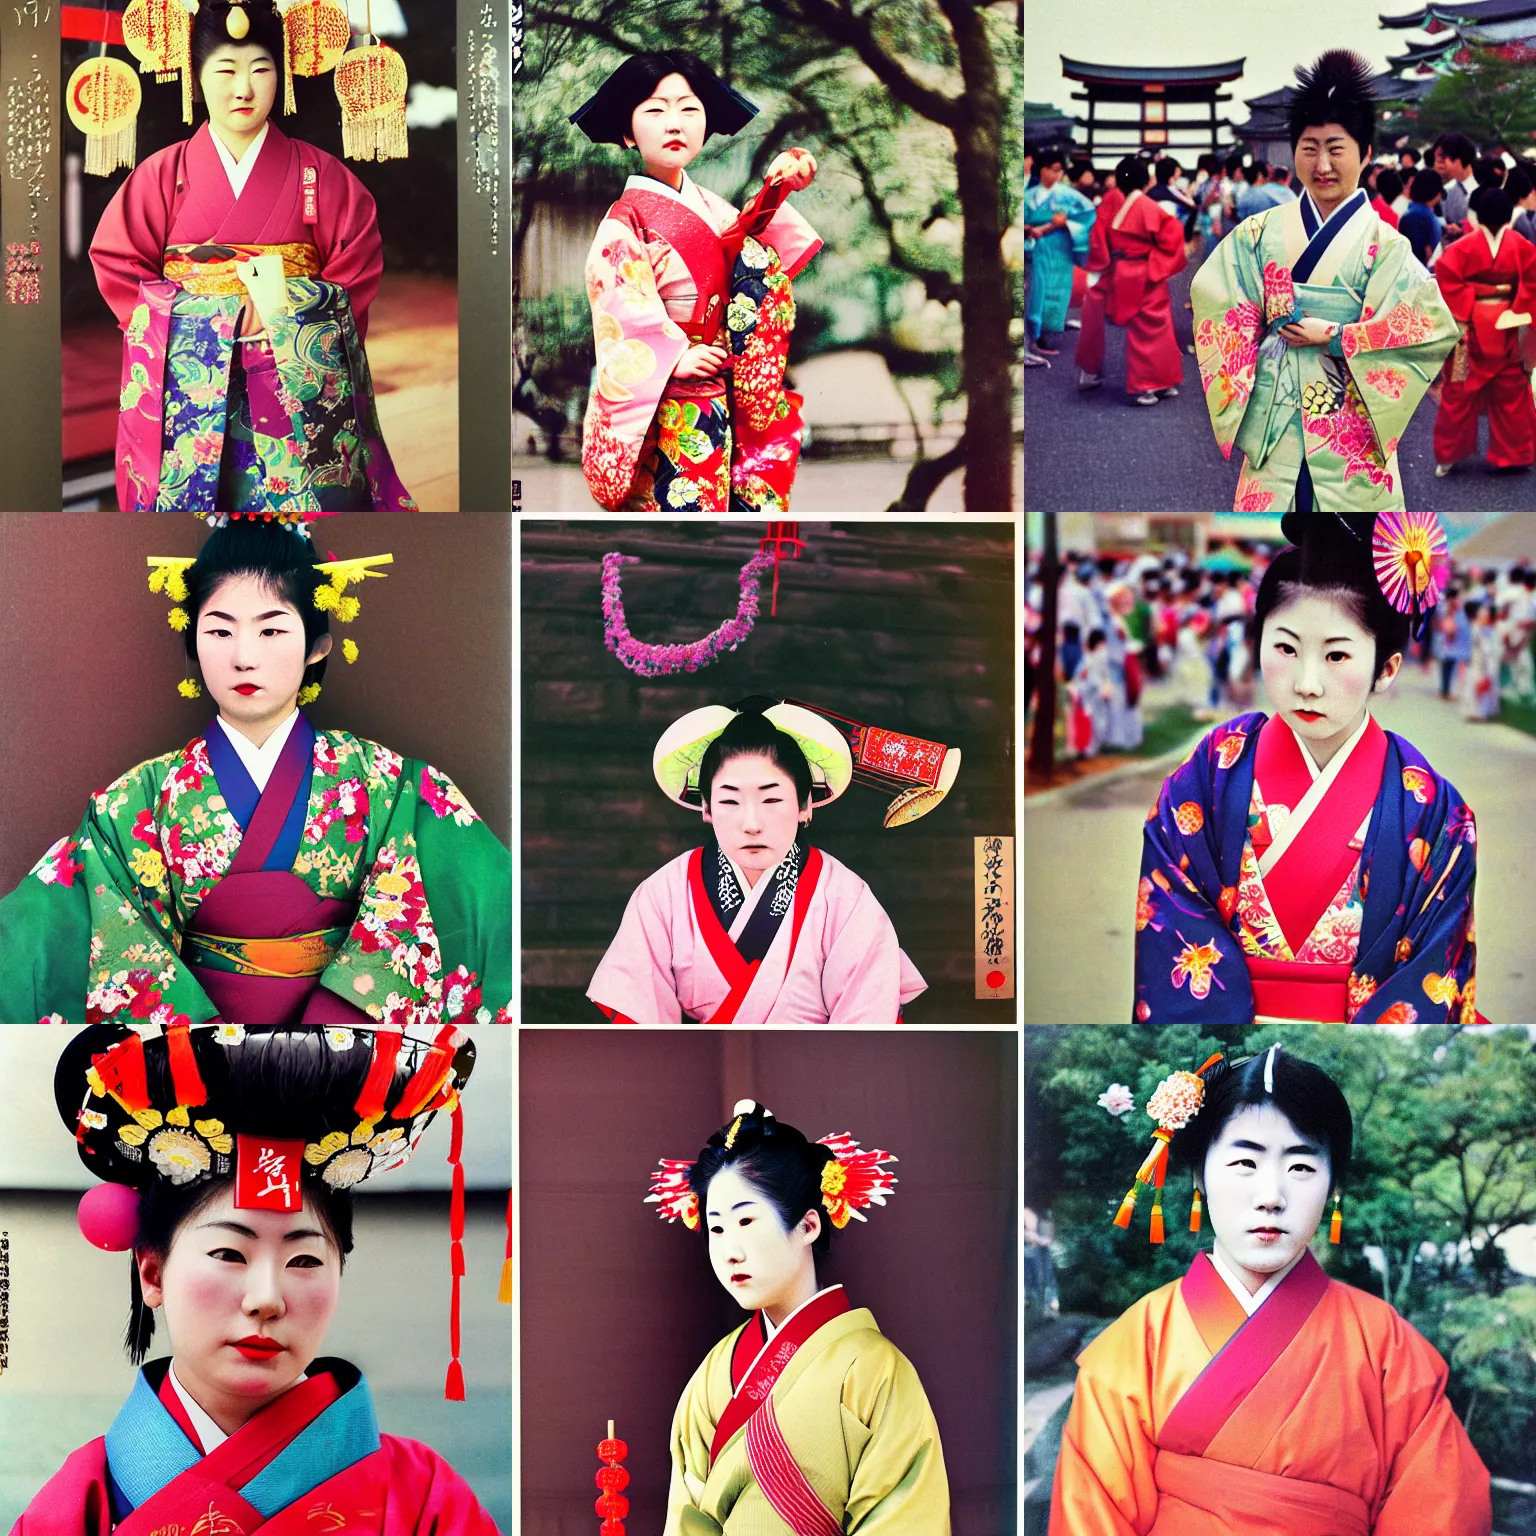 Prompt: color photo portrait of yamakasa japanese traditionally festival. 1 9 9 0 japanese photograph magazine.